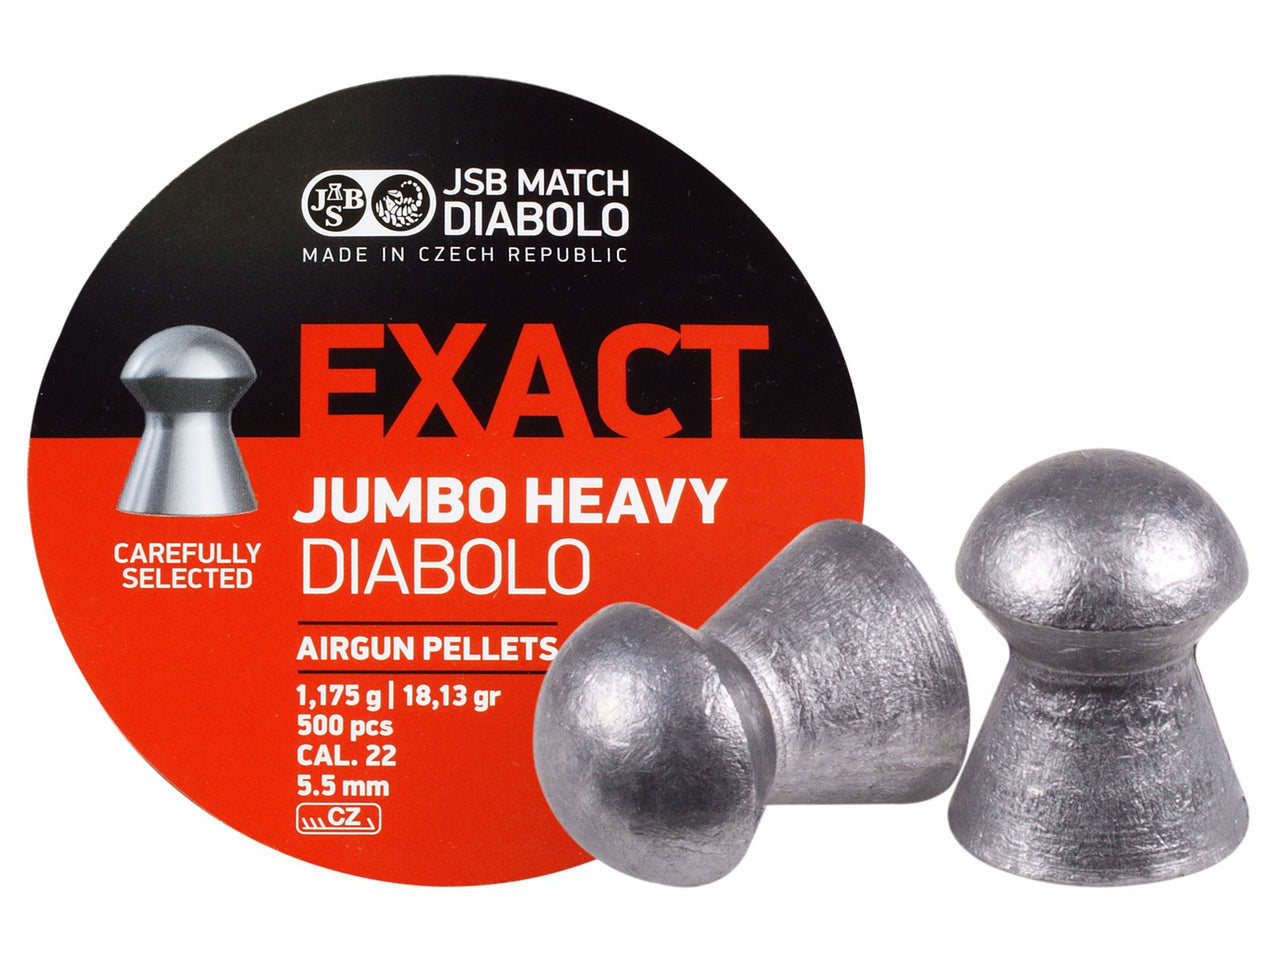 JSB Match Diabolo Exact Jumbo HEAVY | .22 Cal | 18.13 Grains | 500 Ct